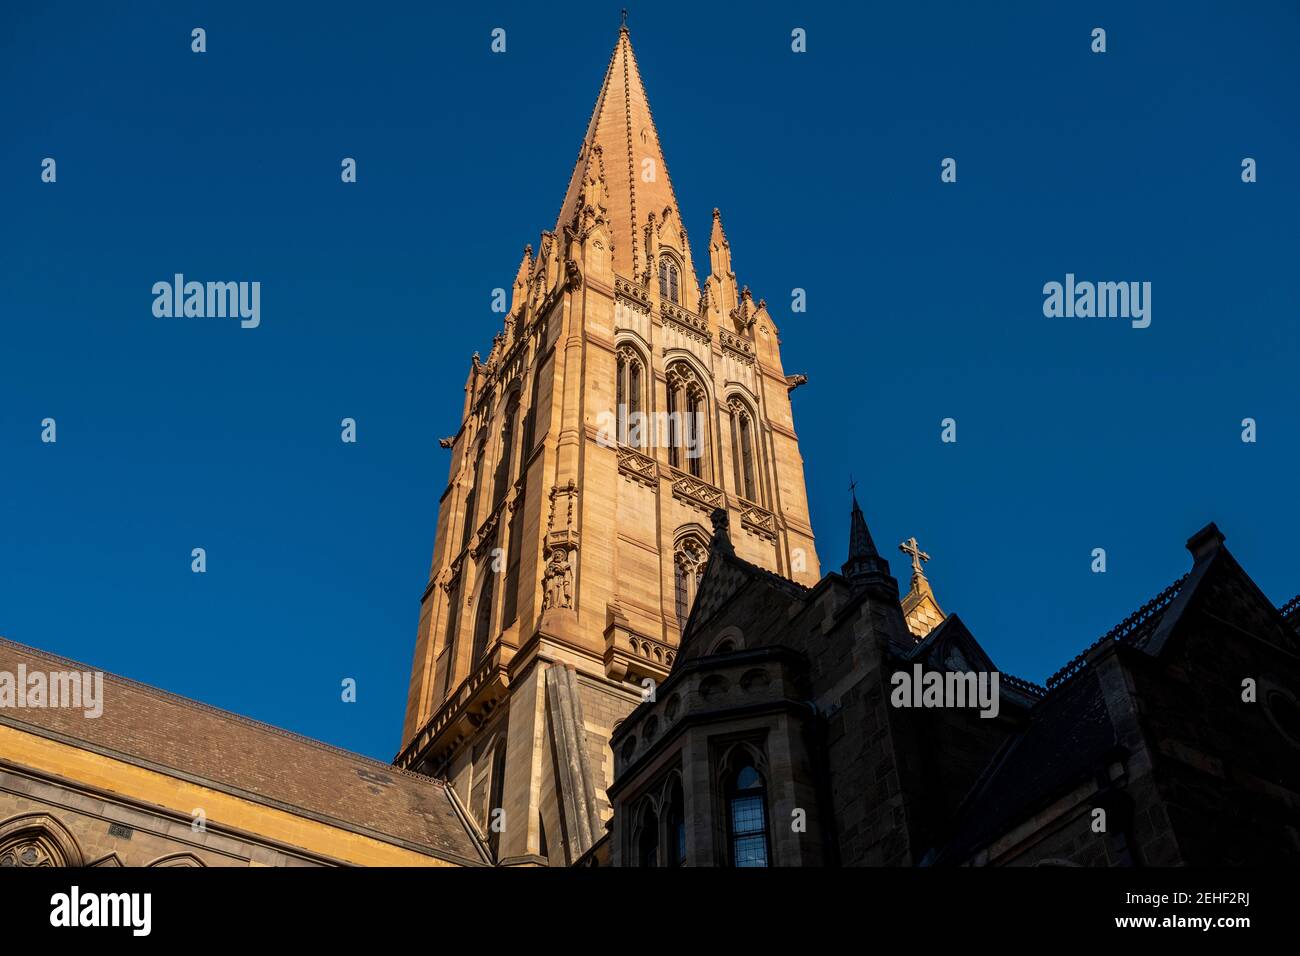 St Paul's Cathedral Melbourne, Victoria, Australia. Stock Photo